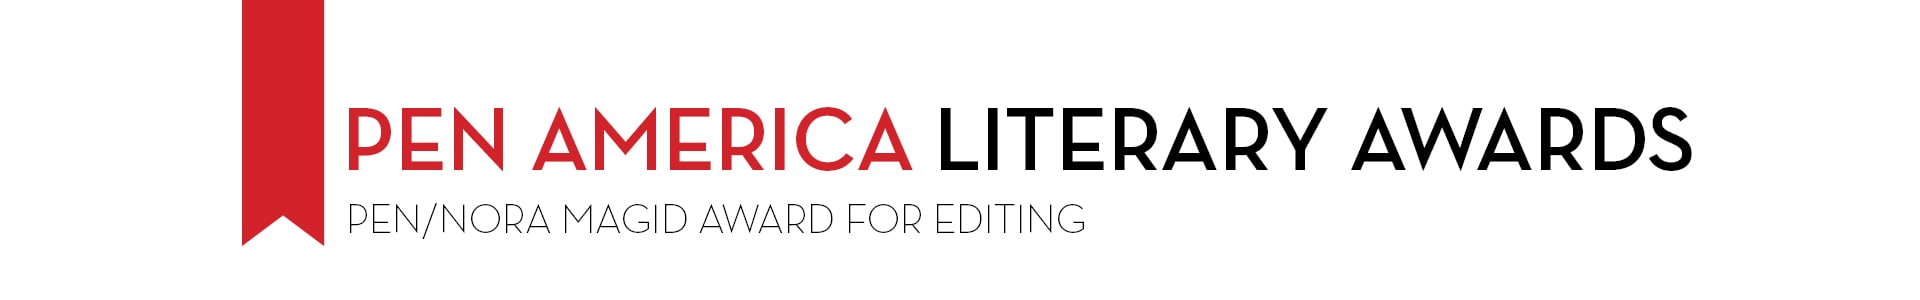 PEN America Literary Awards PEN/Magid Award for Editing